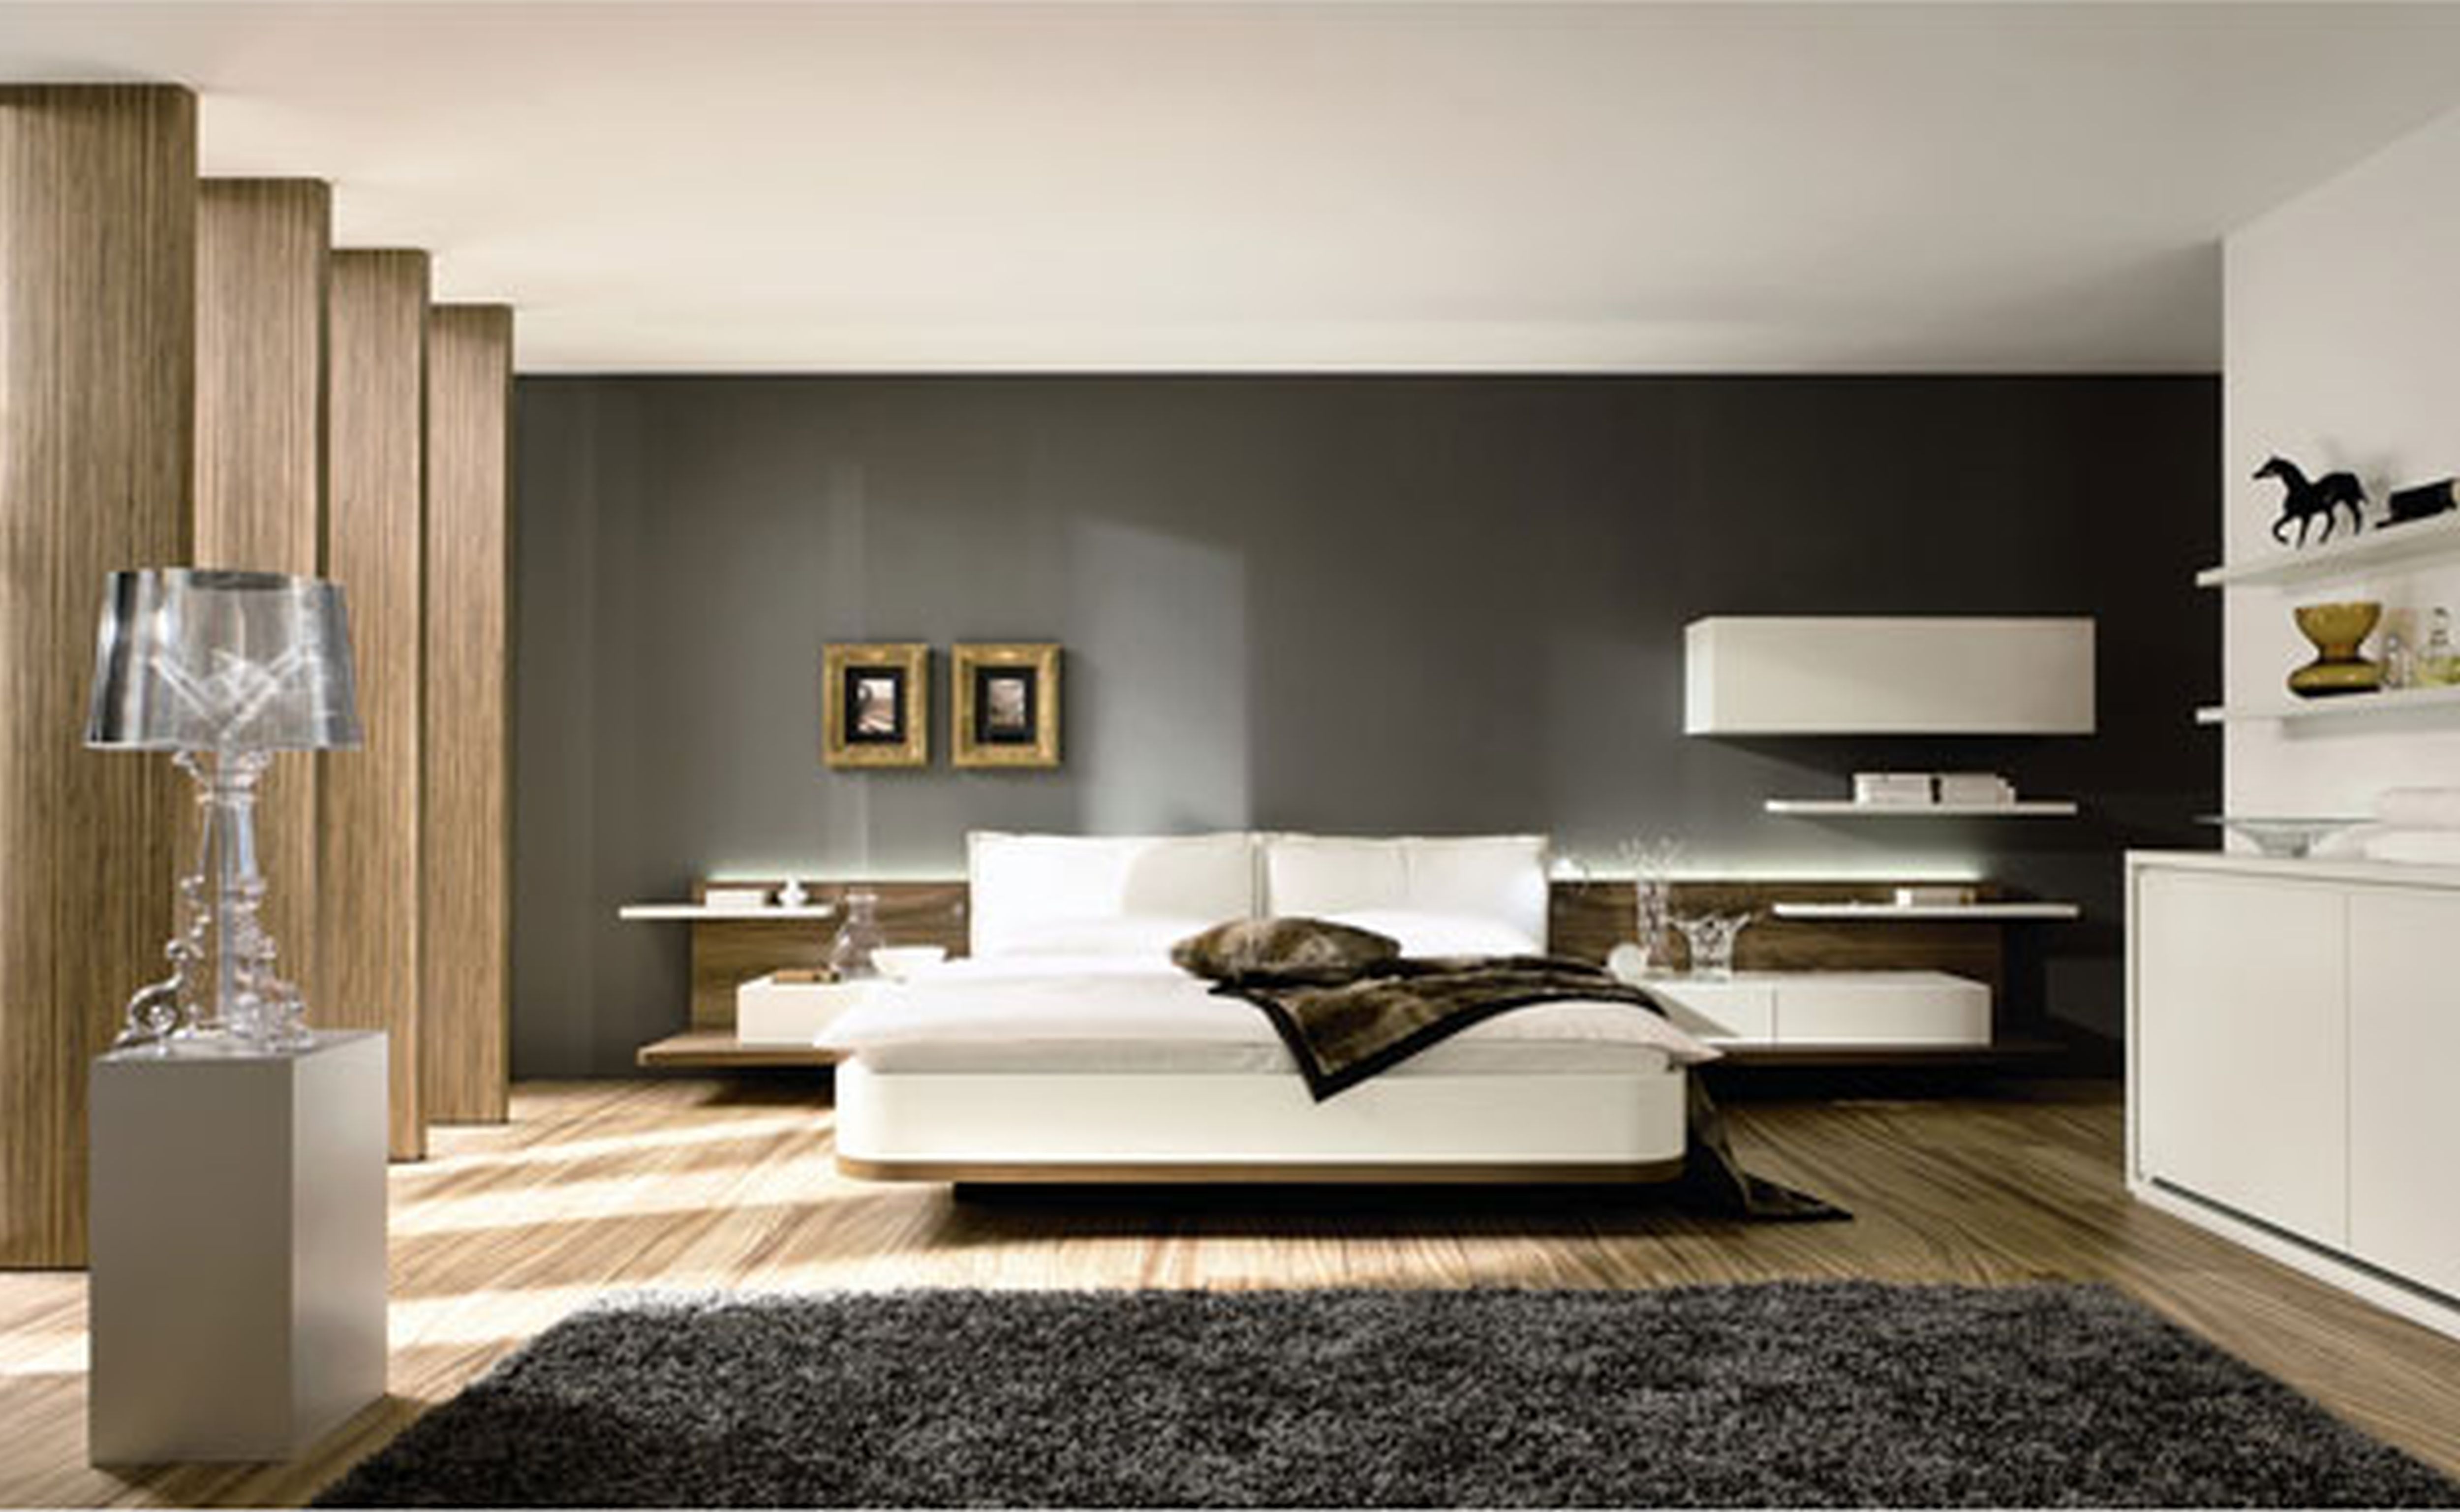 Modern Contemporary Bedroom: Sleek Comfort And Elegance